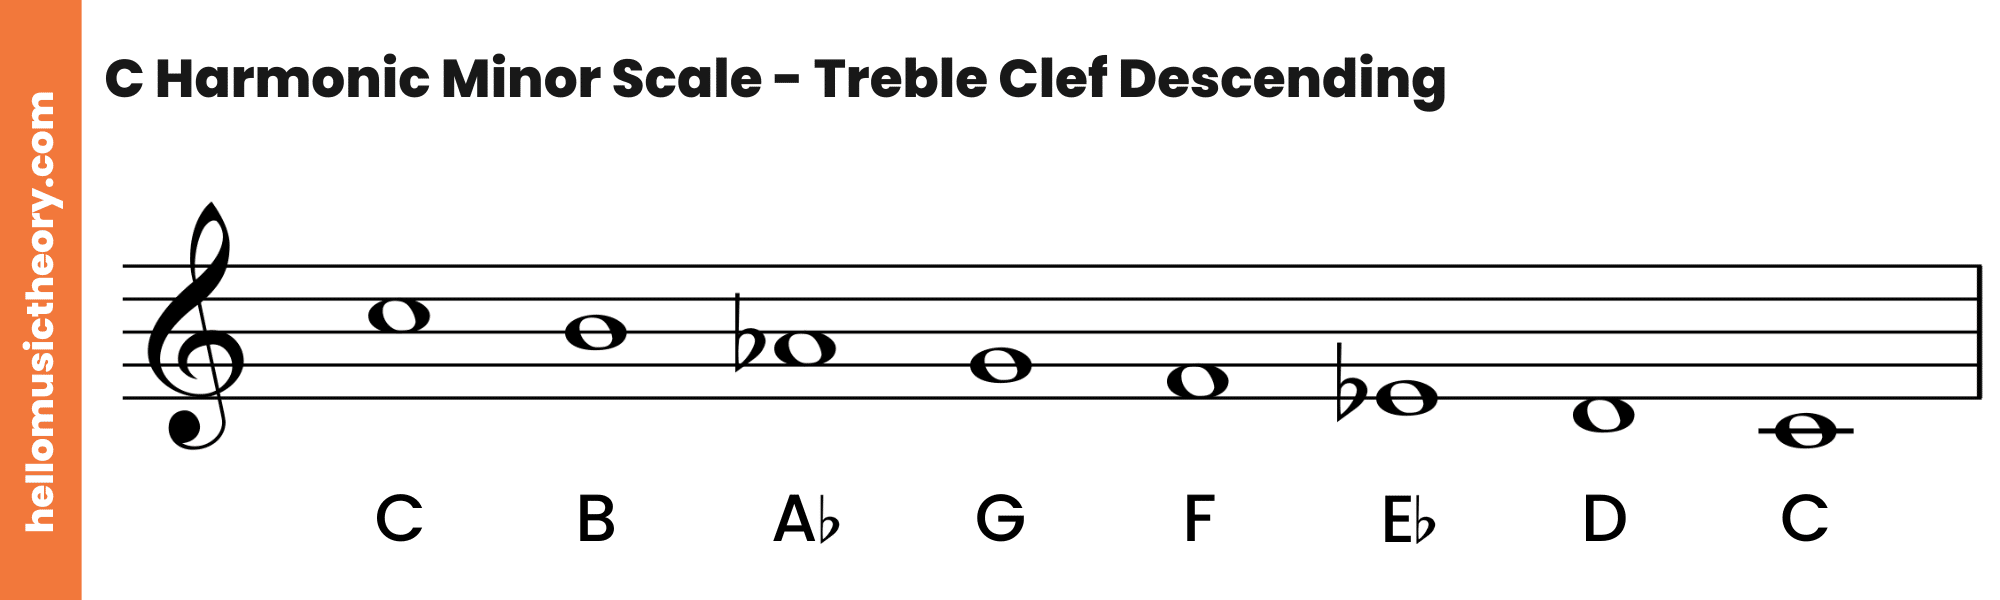 C Harmonic Minor Scale Treble Clef Descending